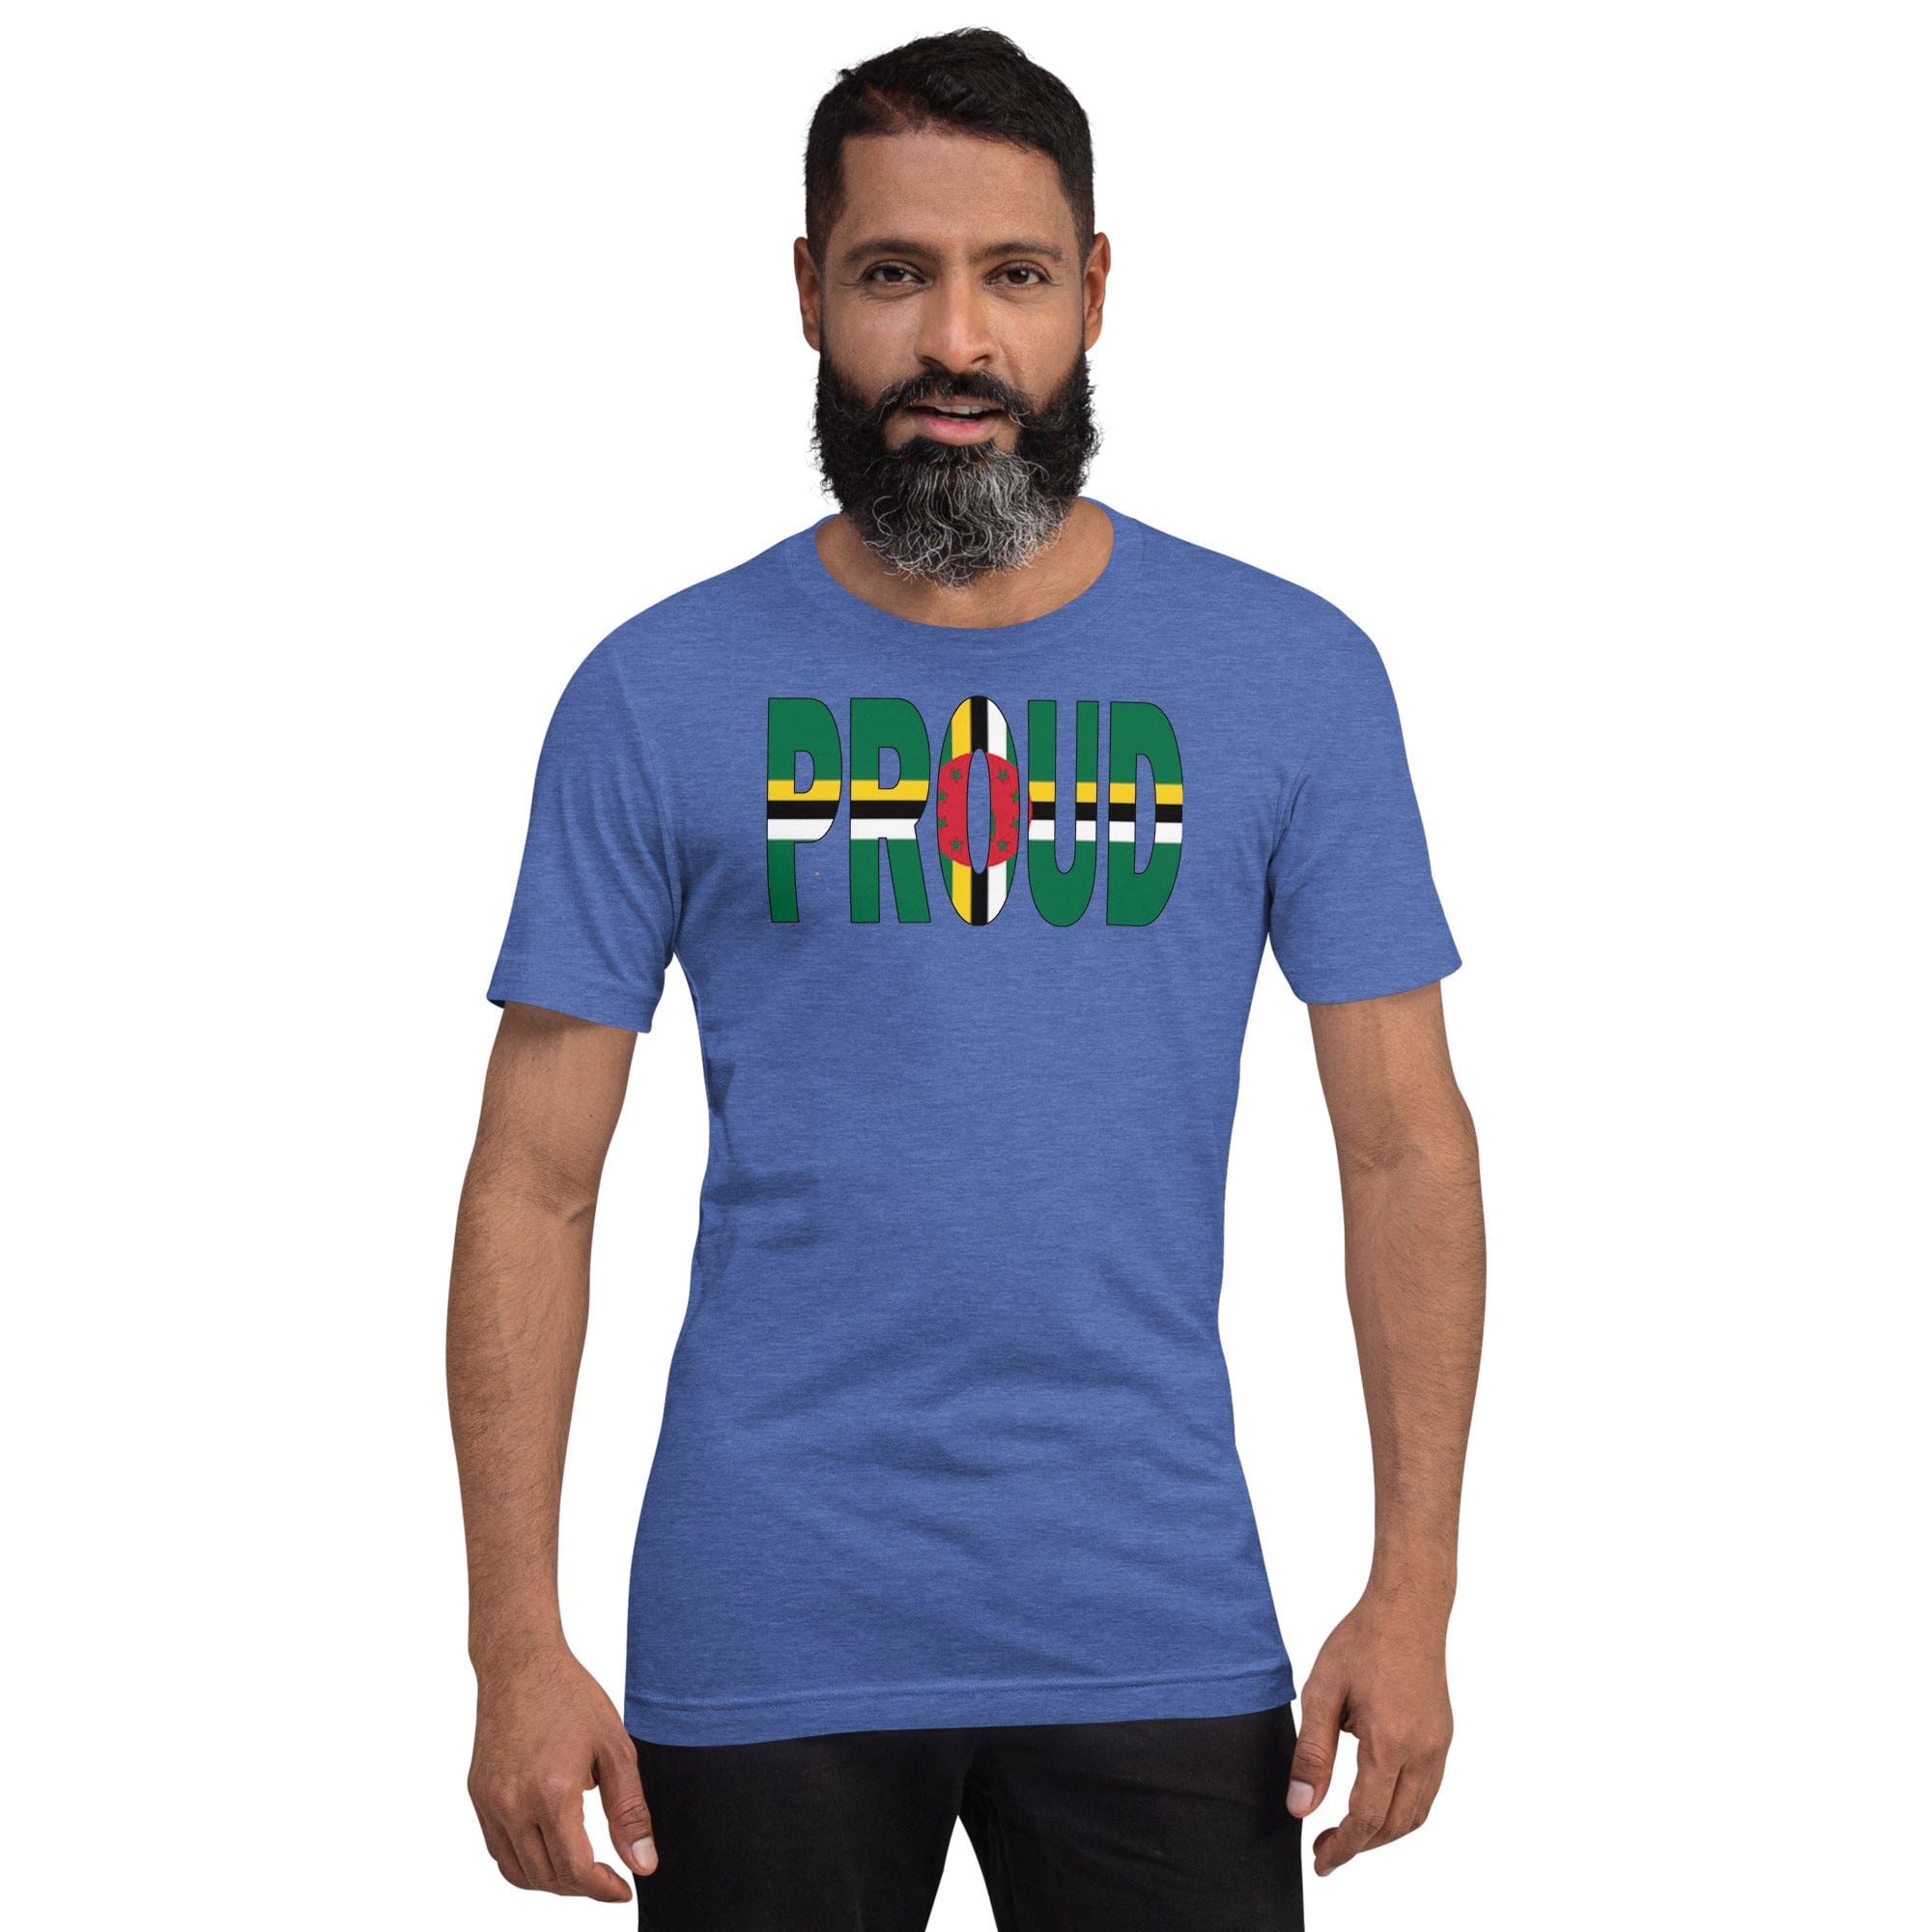  Proud Dominica Flag blue color t-shirt on a black man.